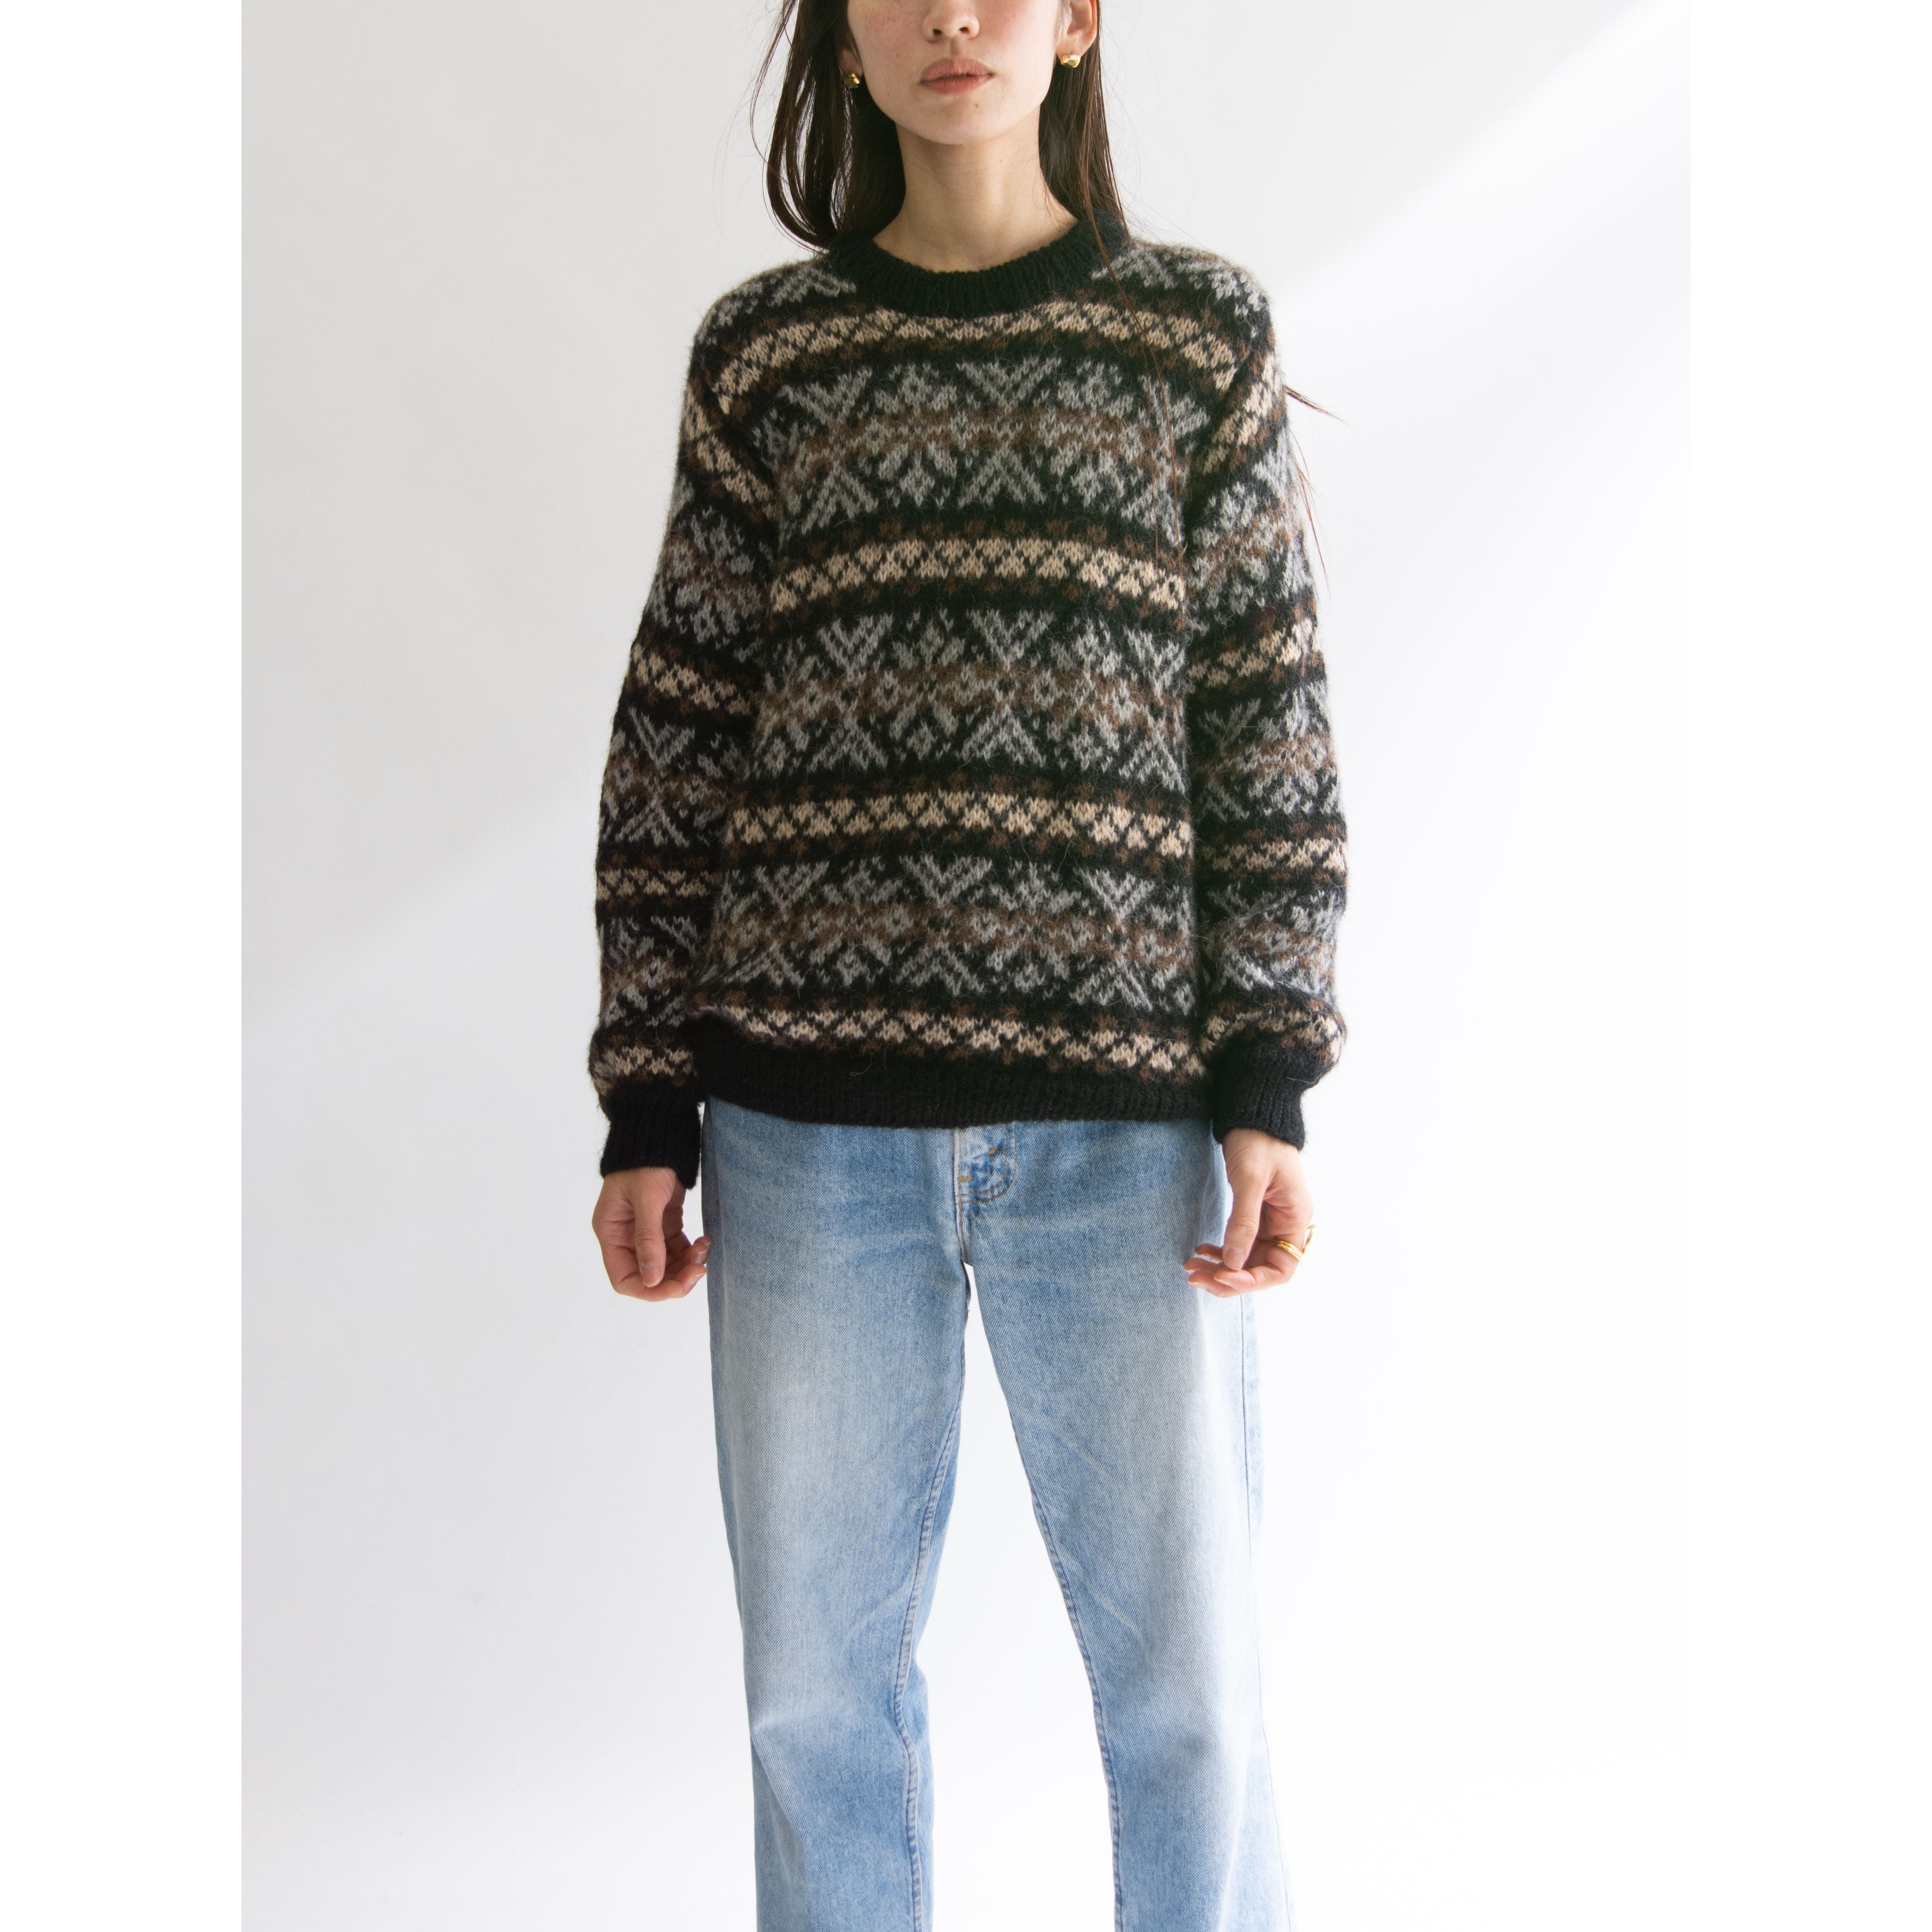 Made in Bolivia】100% Alpaca sweater（ボリビア製 アルパカセーター ...